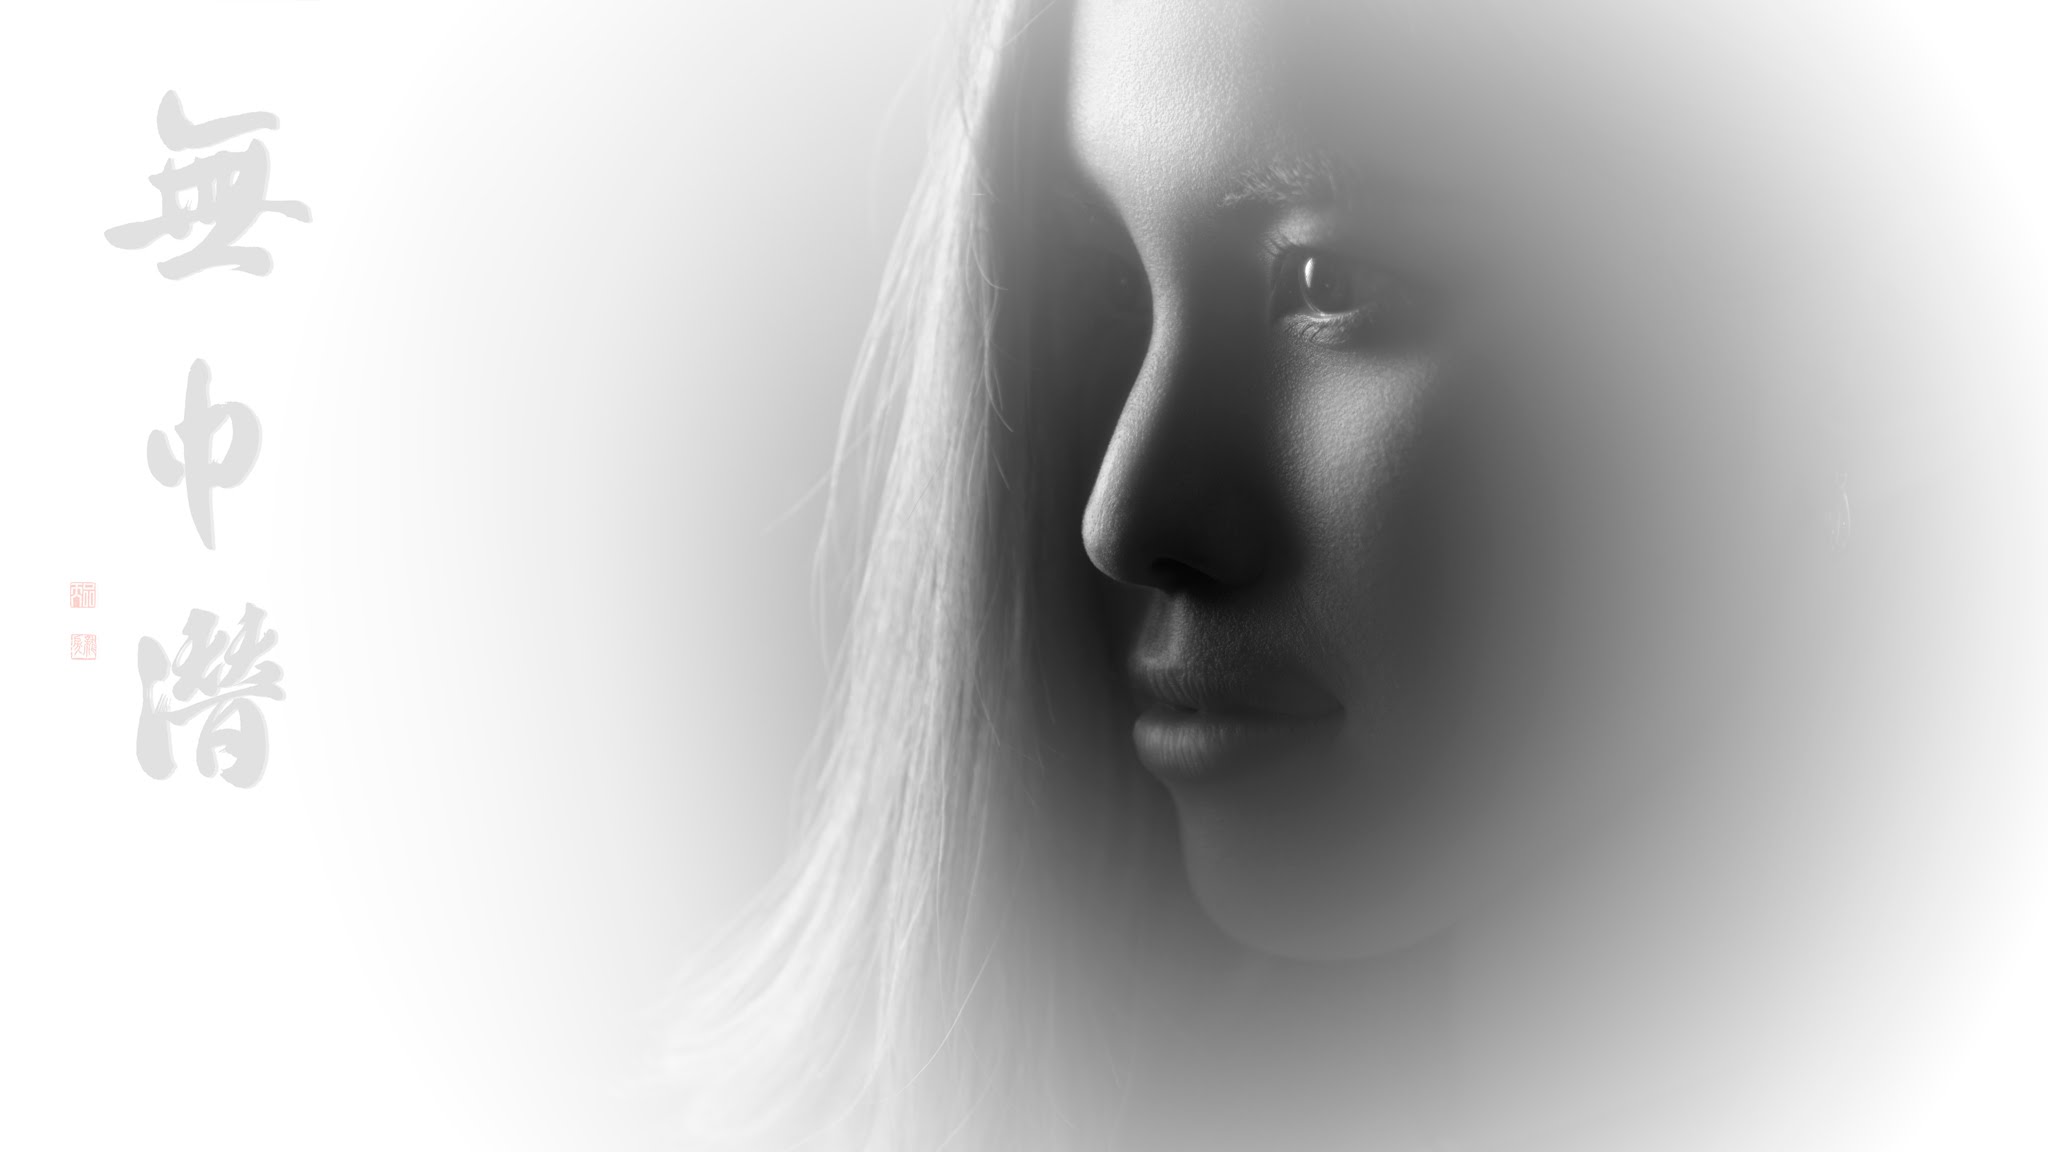 Fine art black and white portrait editing workflow in photoshop (speed art)